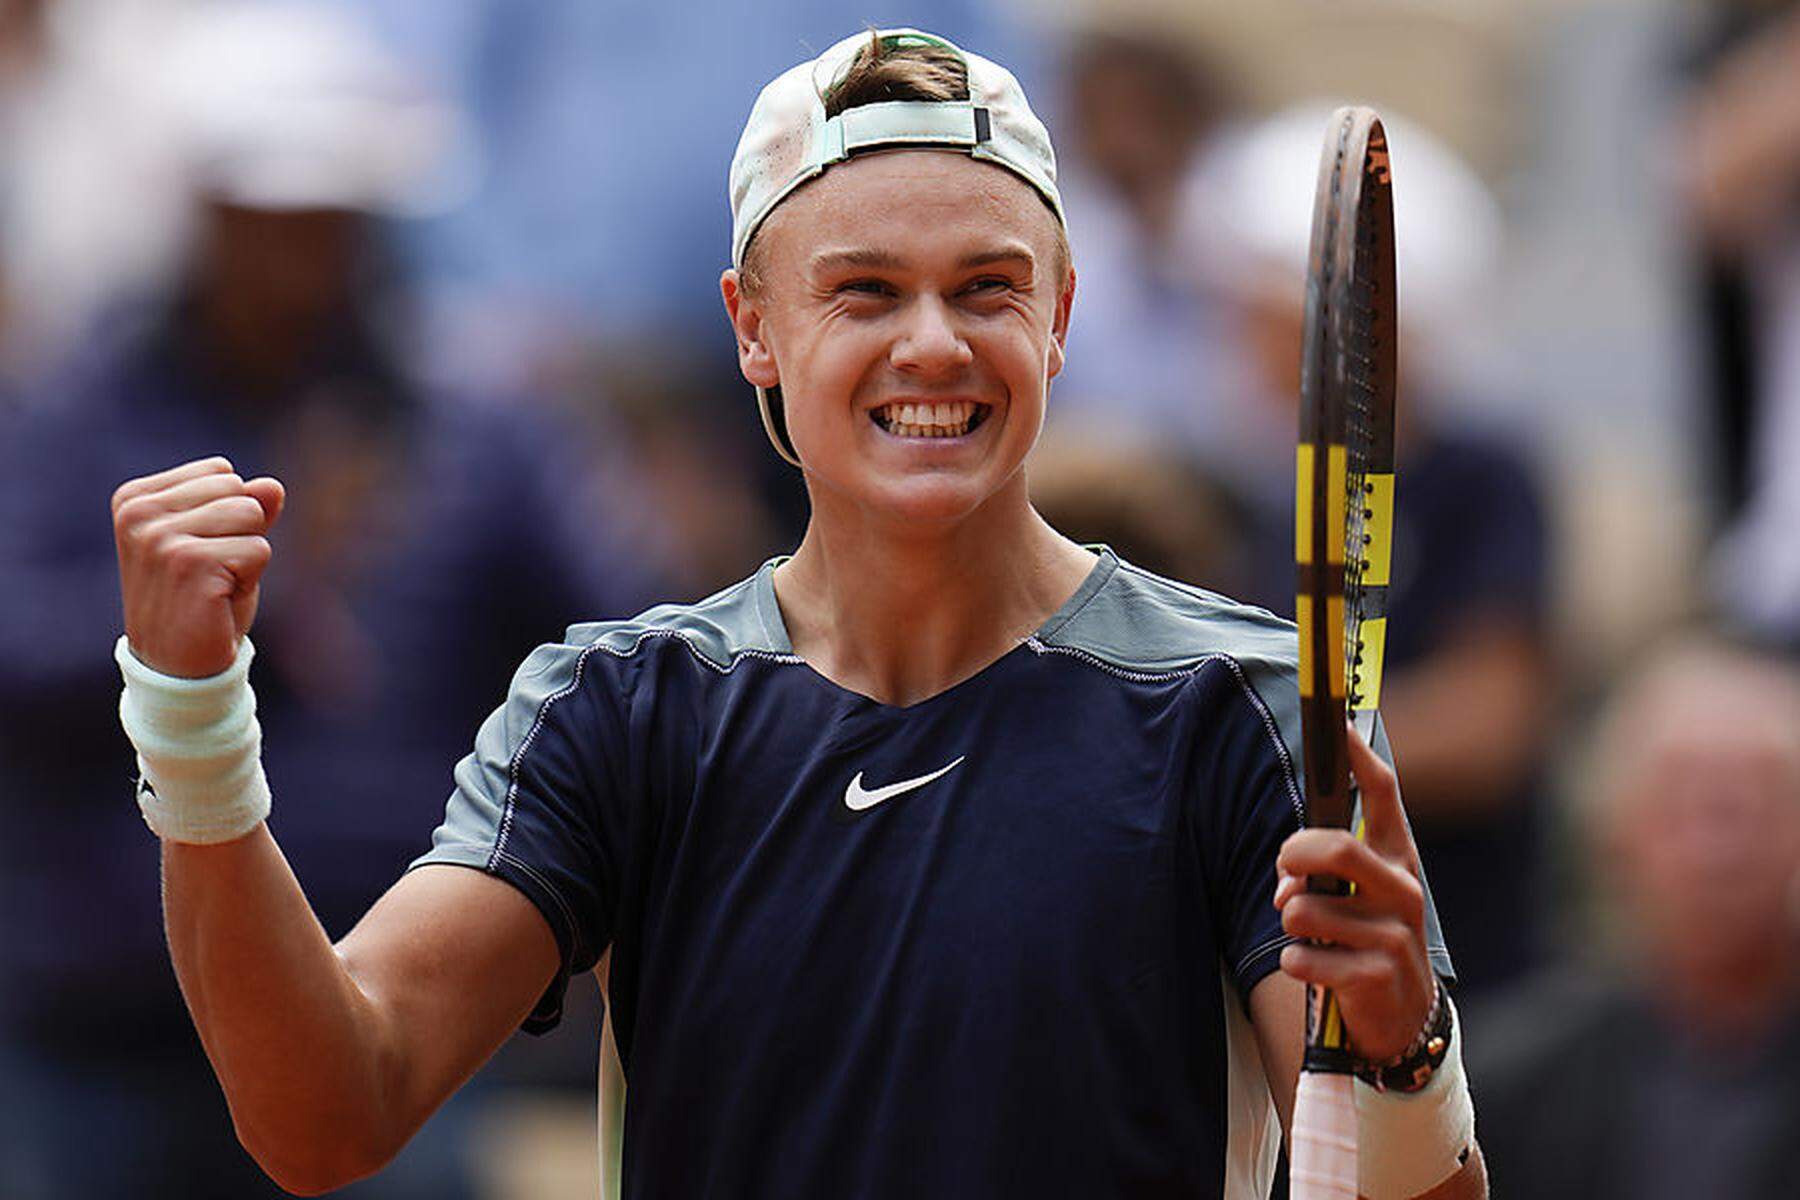 Tennis French Open 19-jähriger Holger Rune eliminiert überraschend Stefanos Tsitsipas